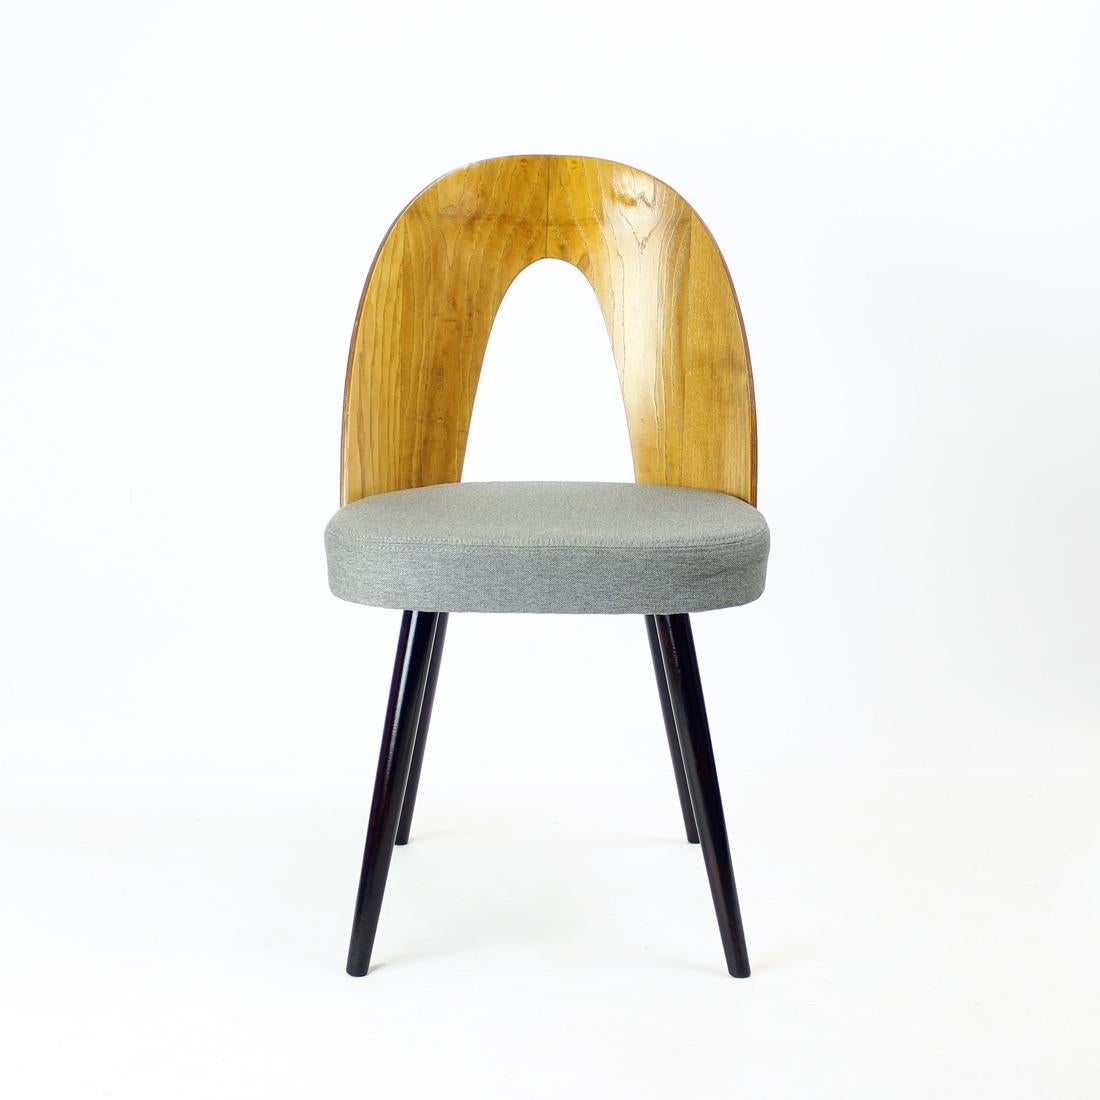 Mid-20th Century Iconic Tatra Chairs In Oak & Fabric By Antonin Šuman, Tatra 1960s For Sale